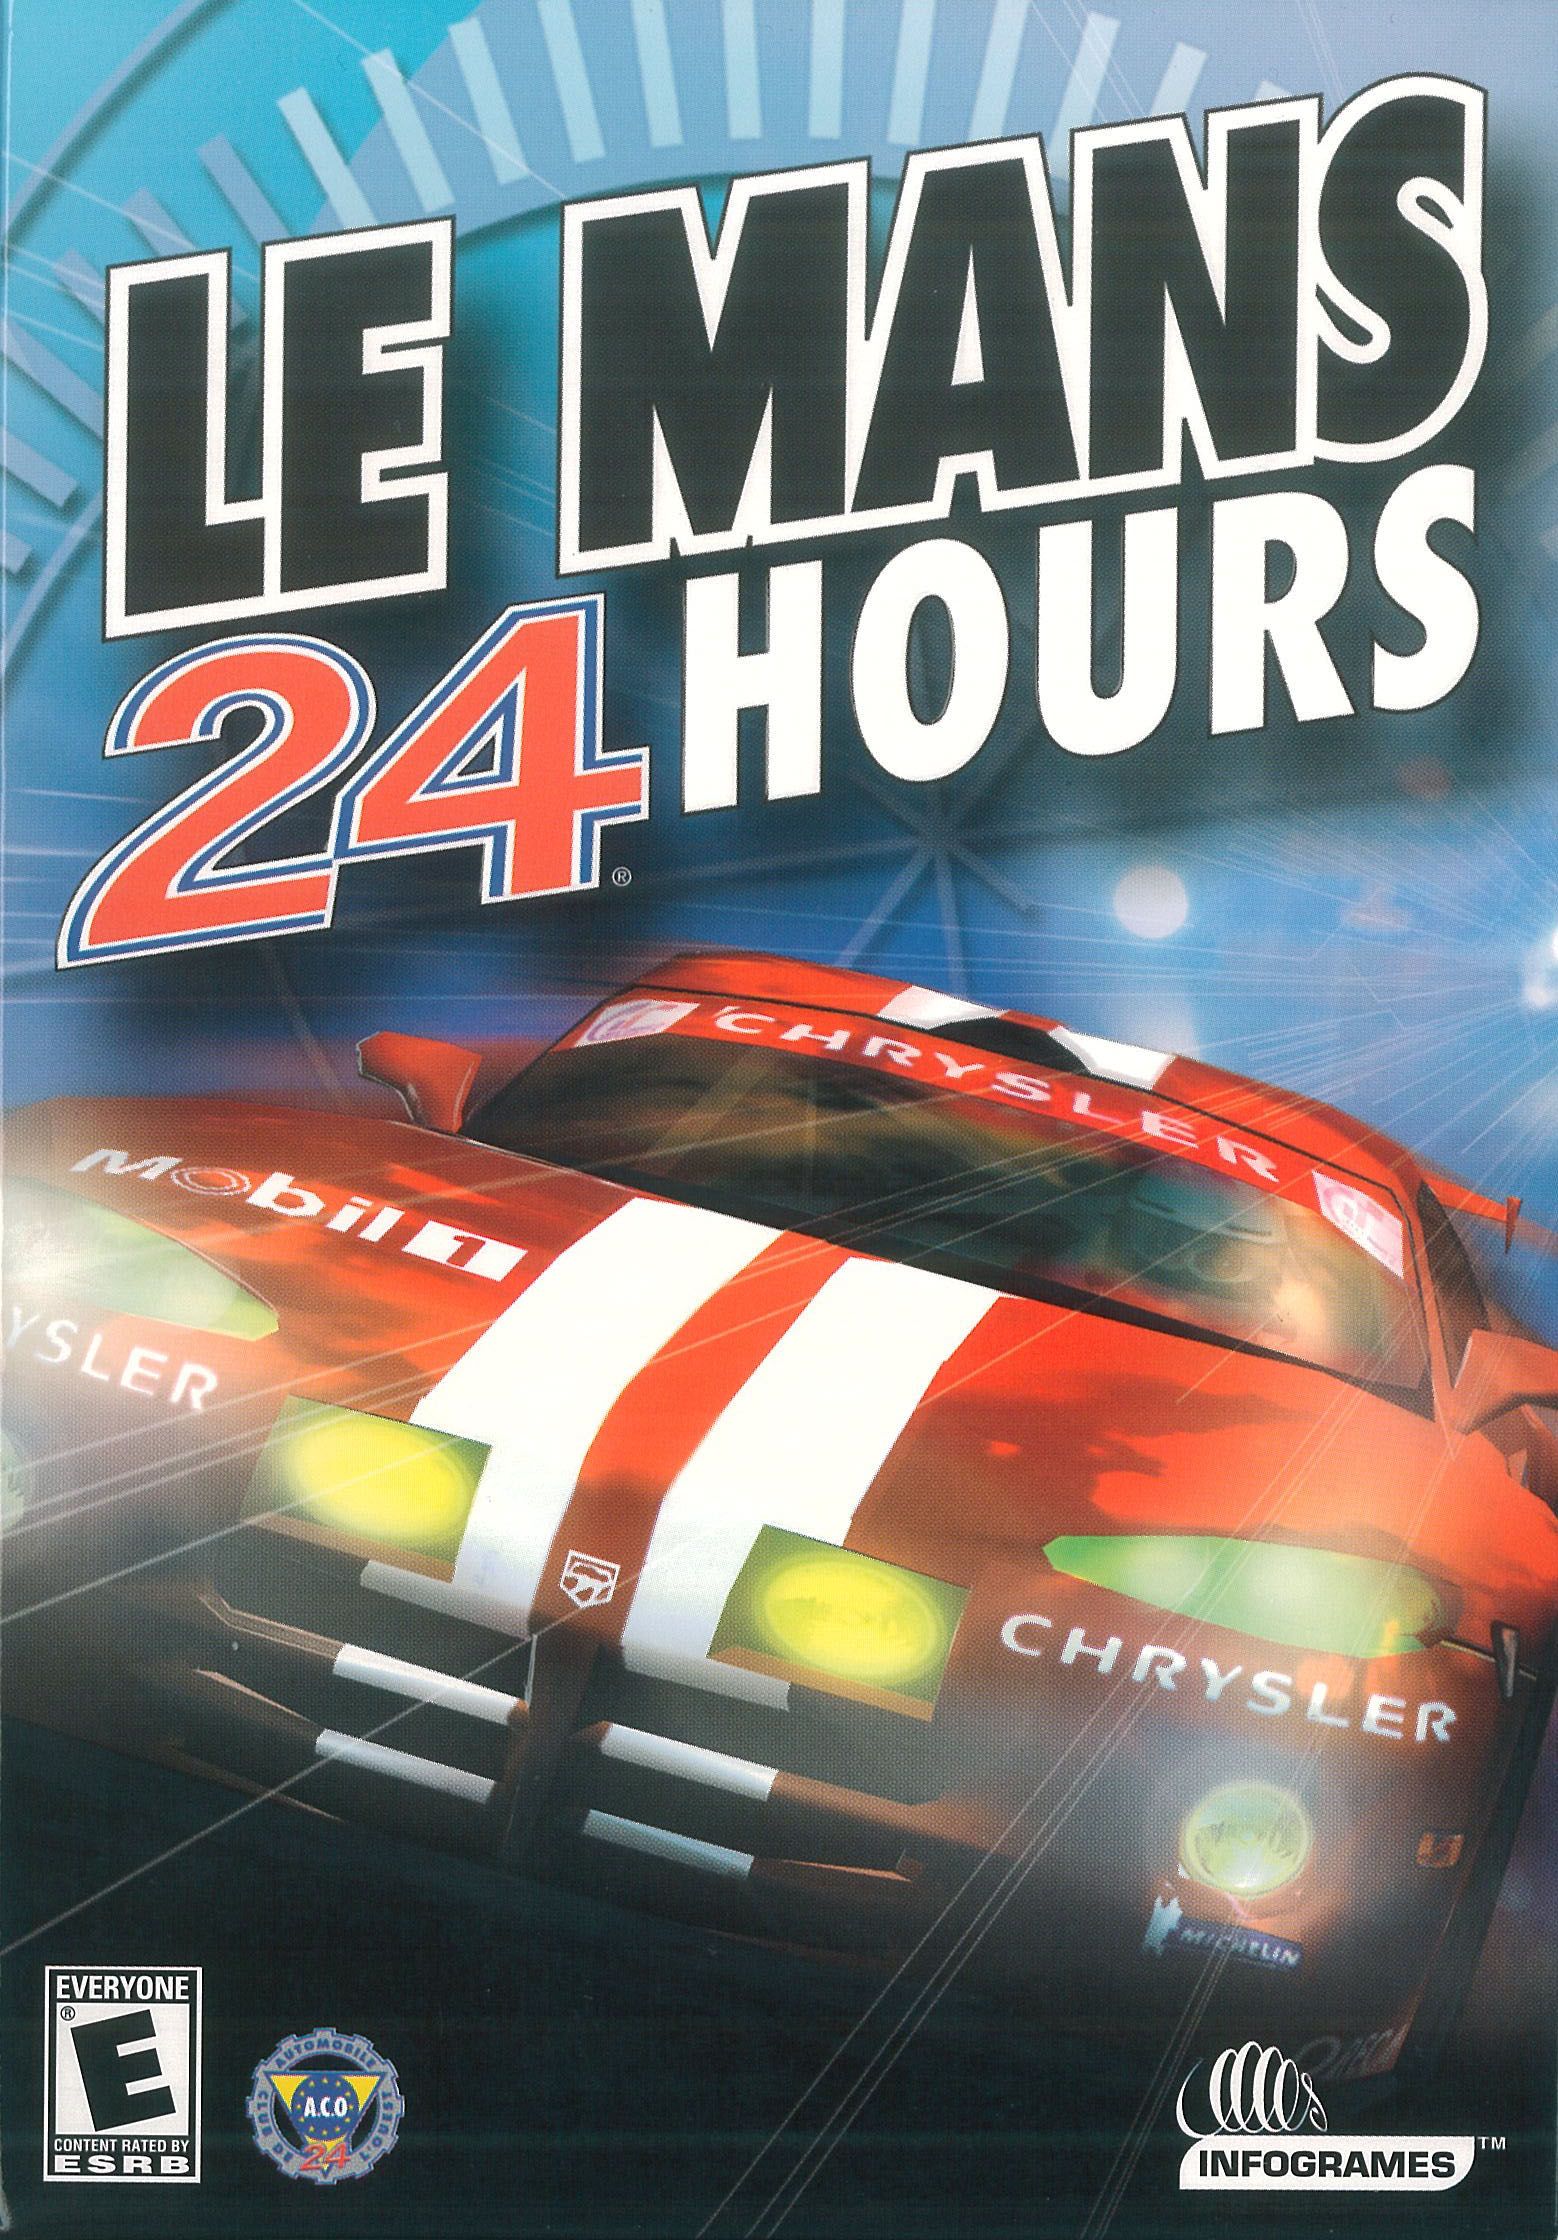 24 hours game. Lemans 24 hours / Ле-ман 24 часа Rus (2002). Le mans 24 hours PC. Гонка 24 часа. Le mans 24 hours ps1.